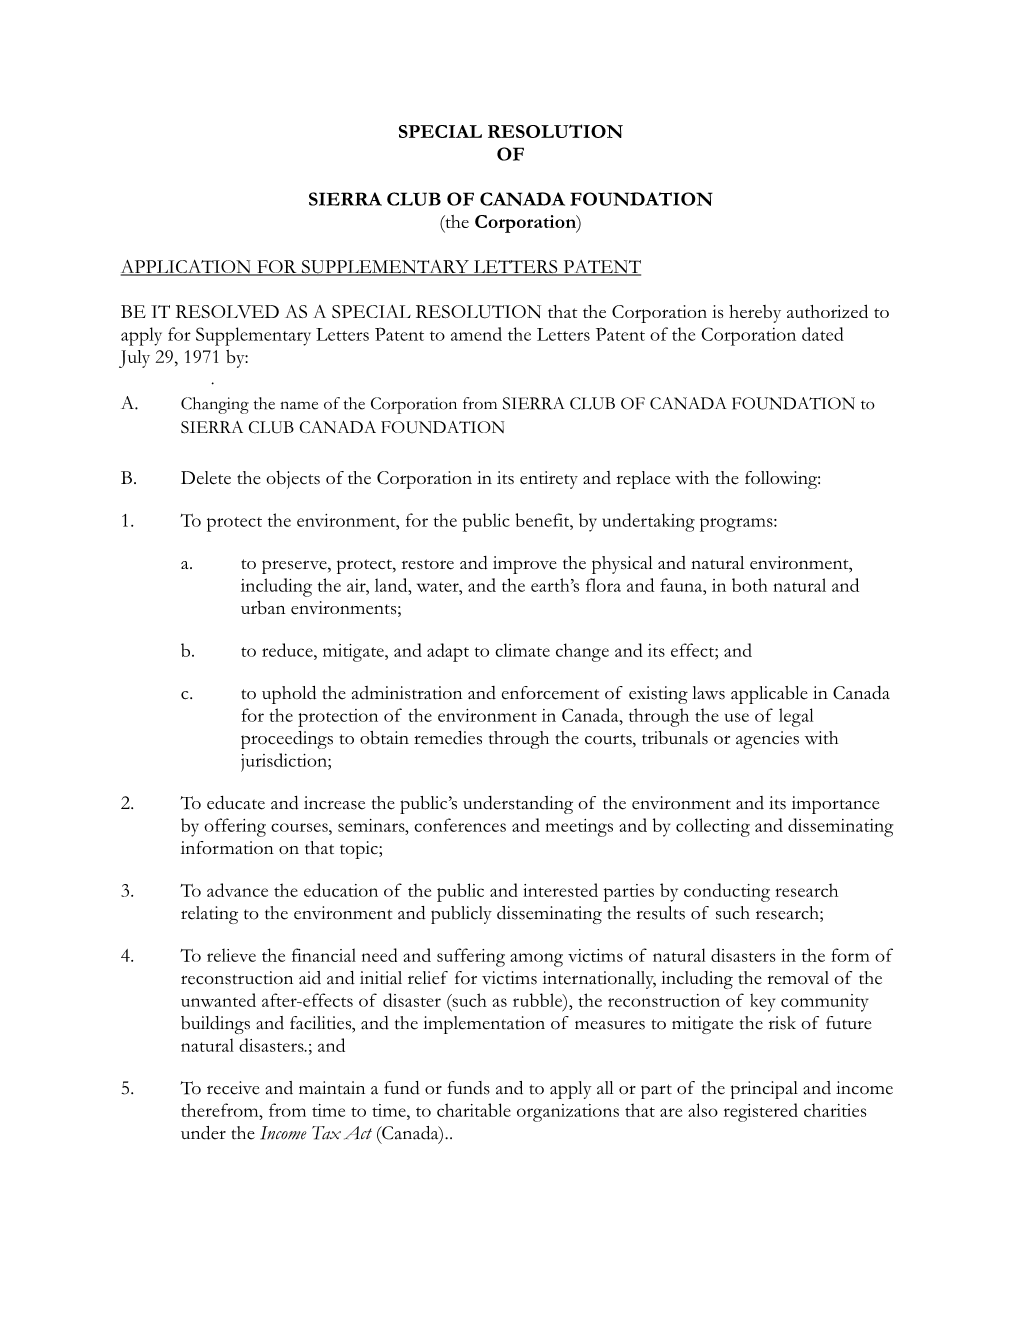 Special Resolution of Sierra Club Of